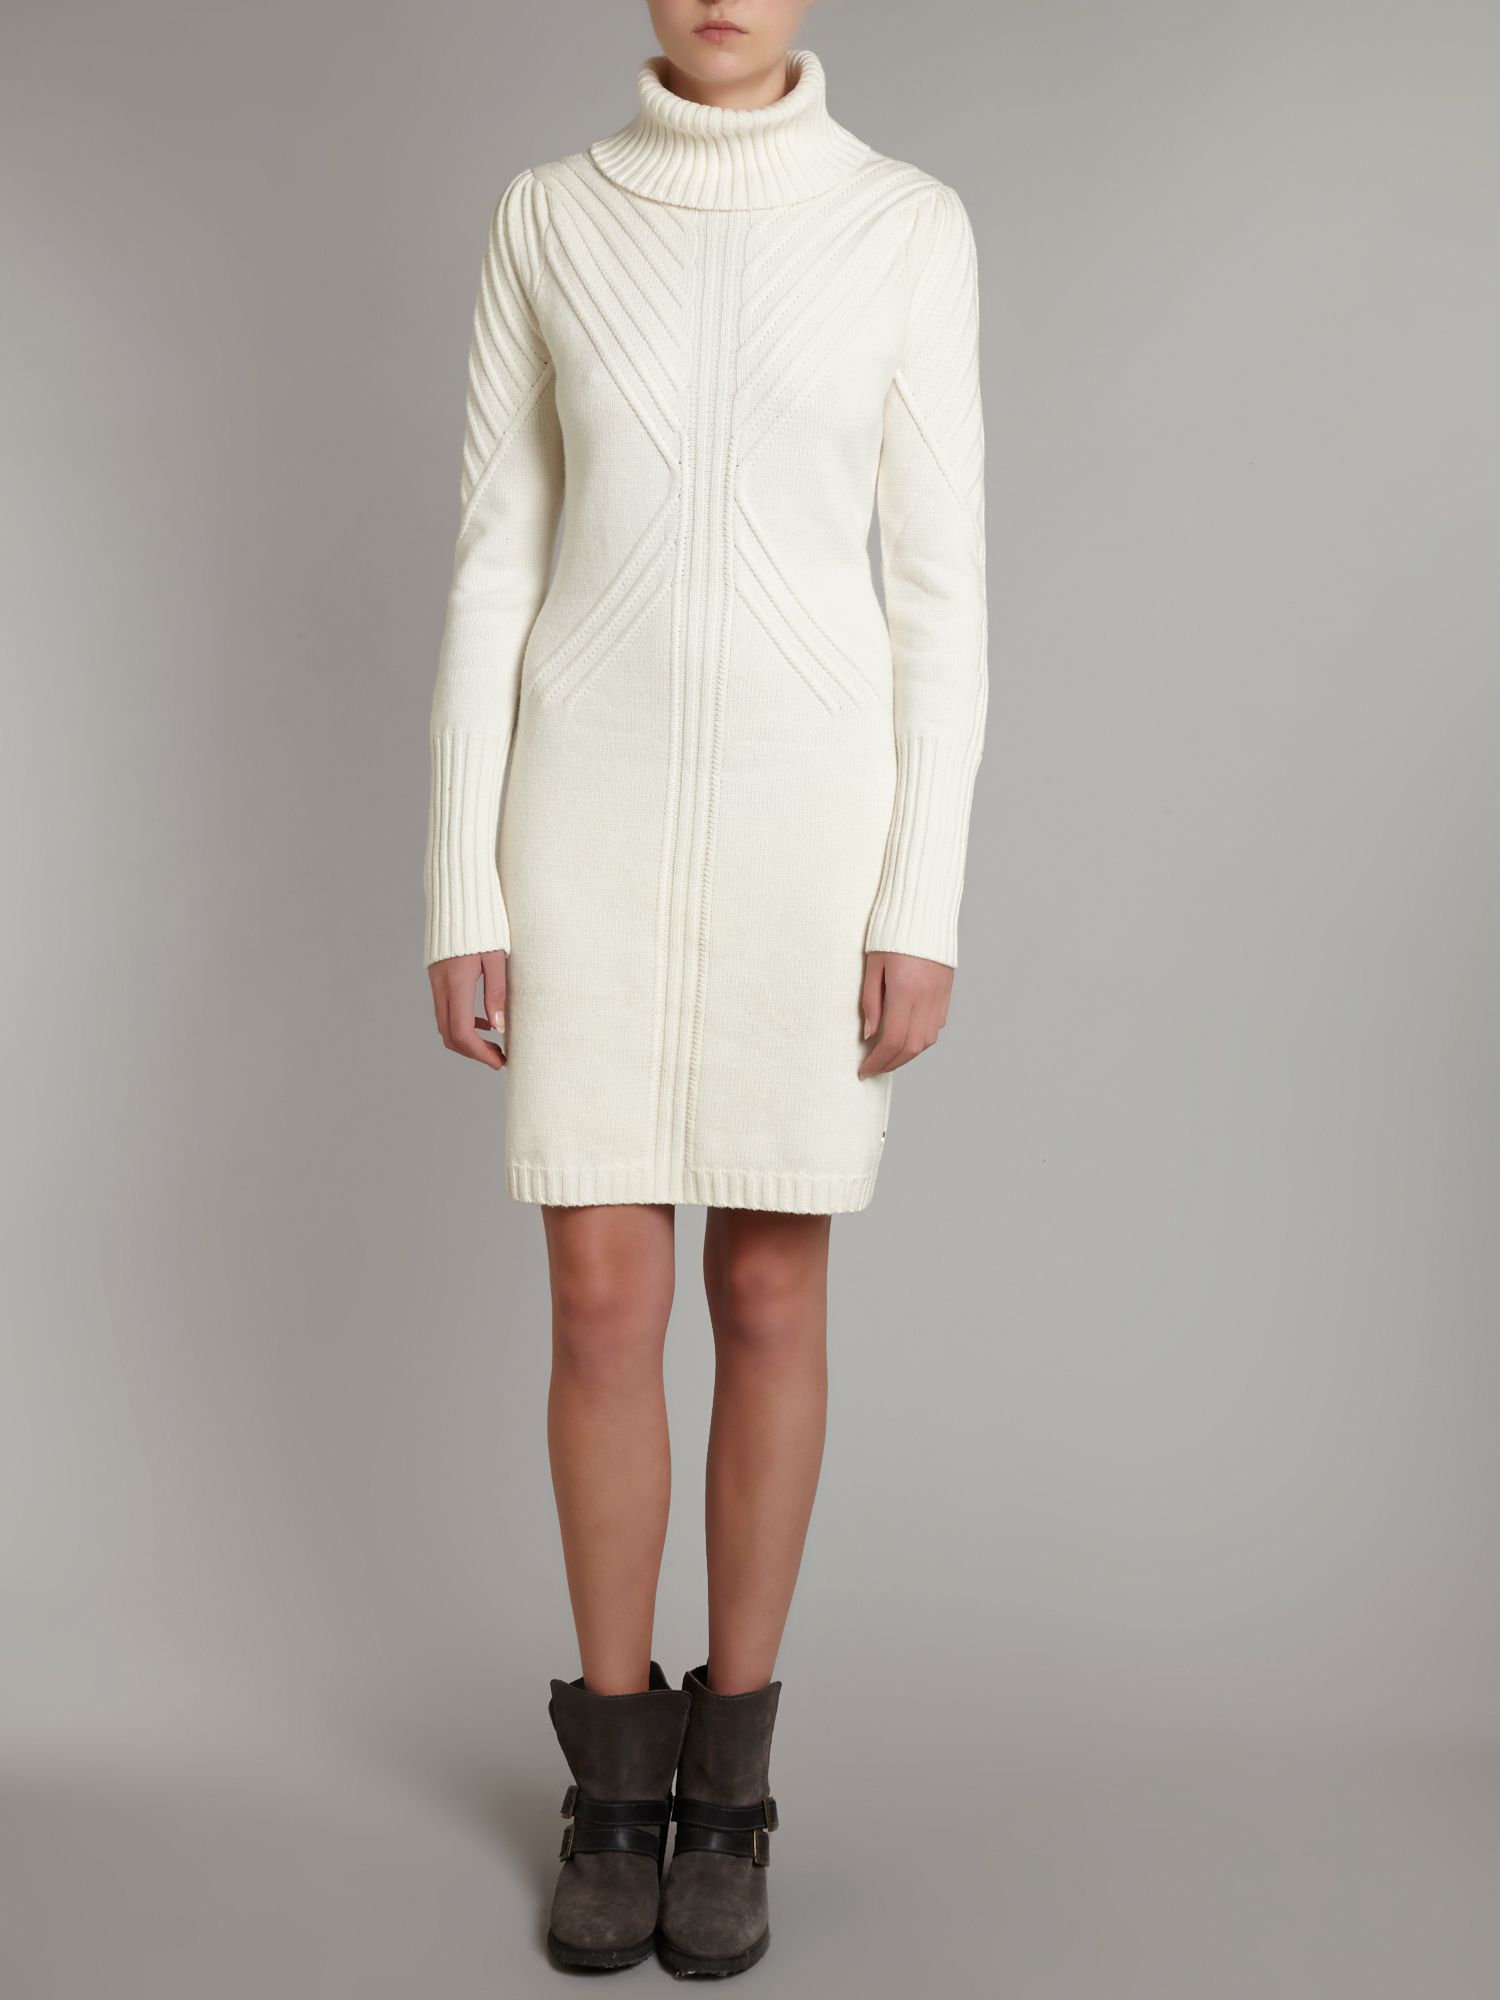 winter white knit dress